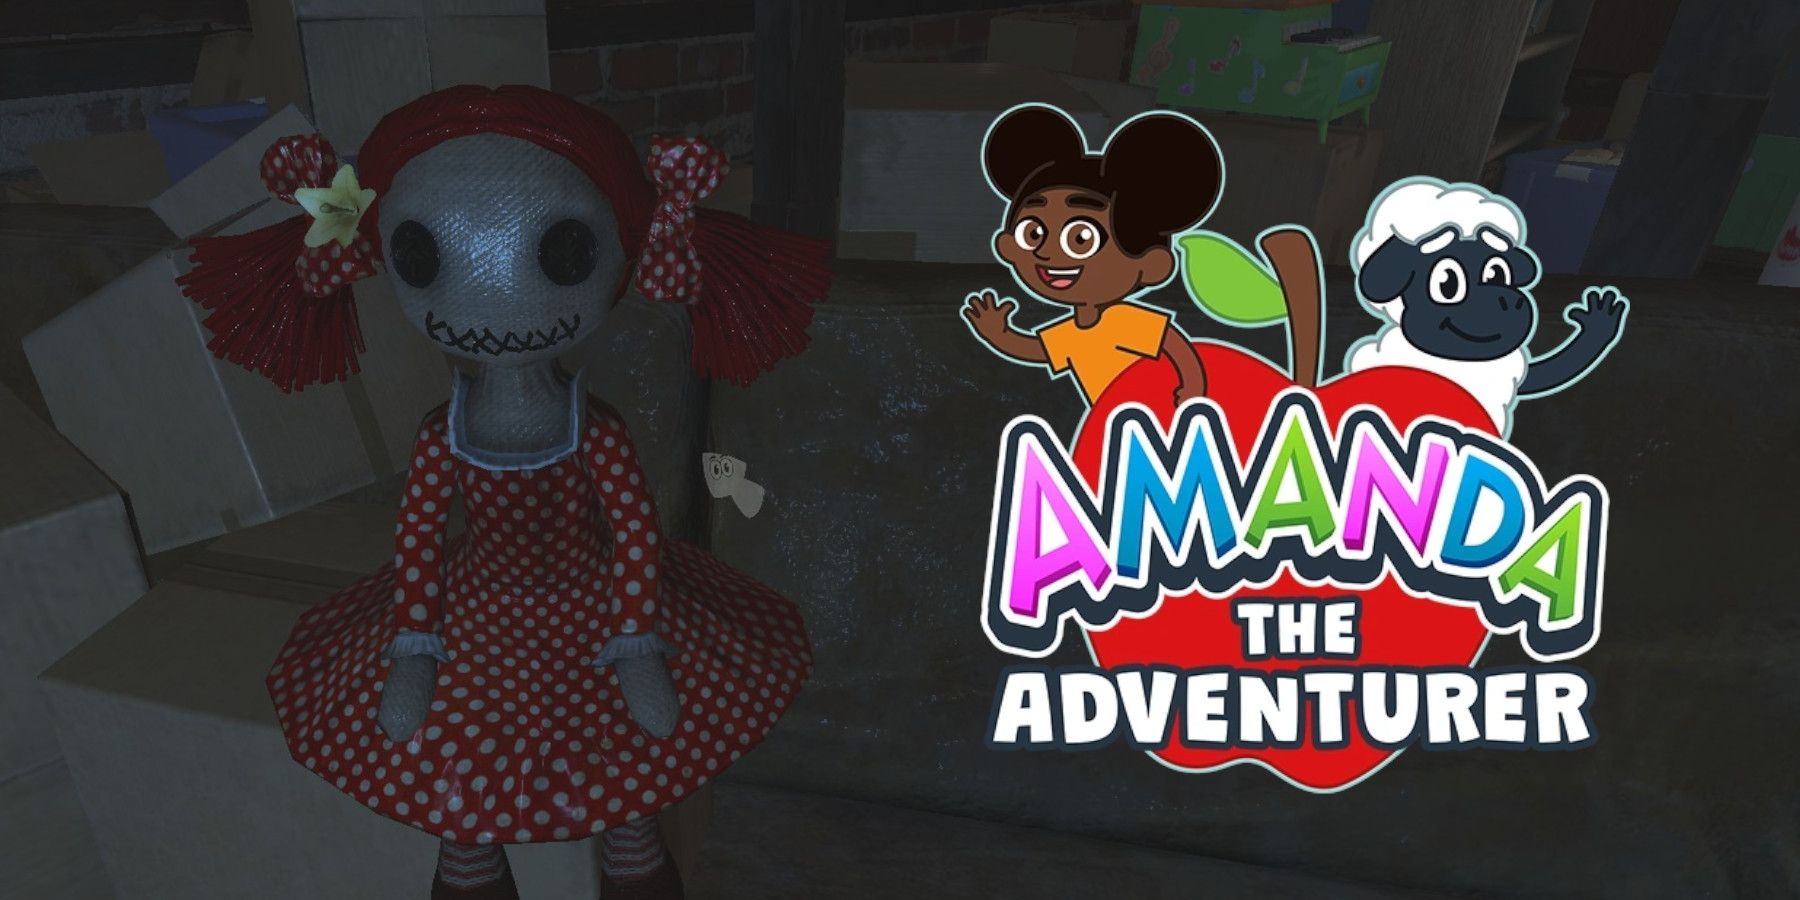 About: Amanda the Adventurer (Google Play version)